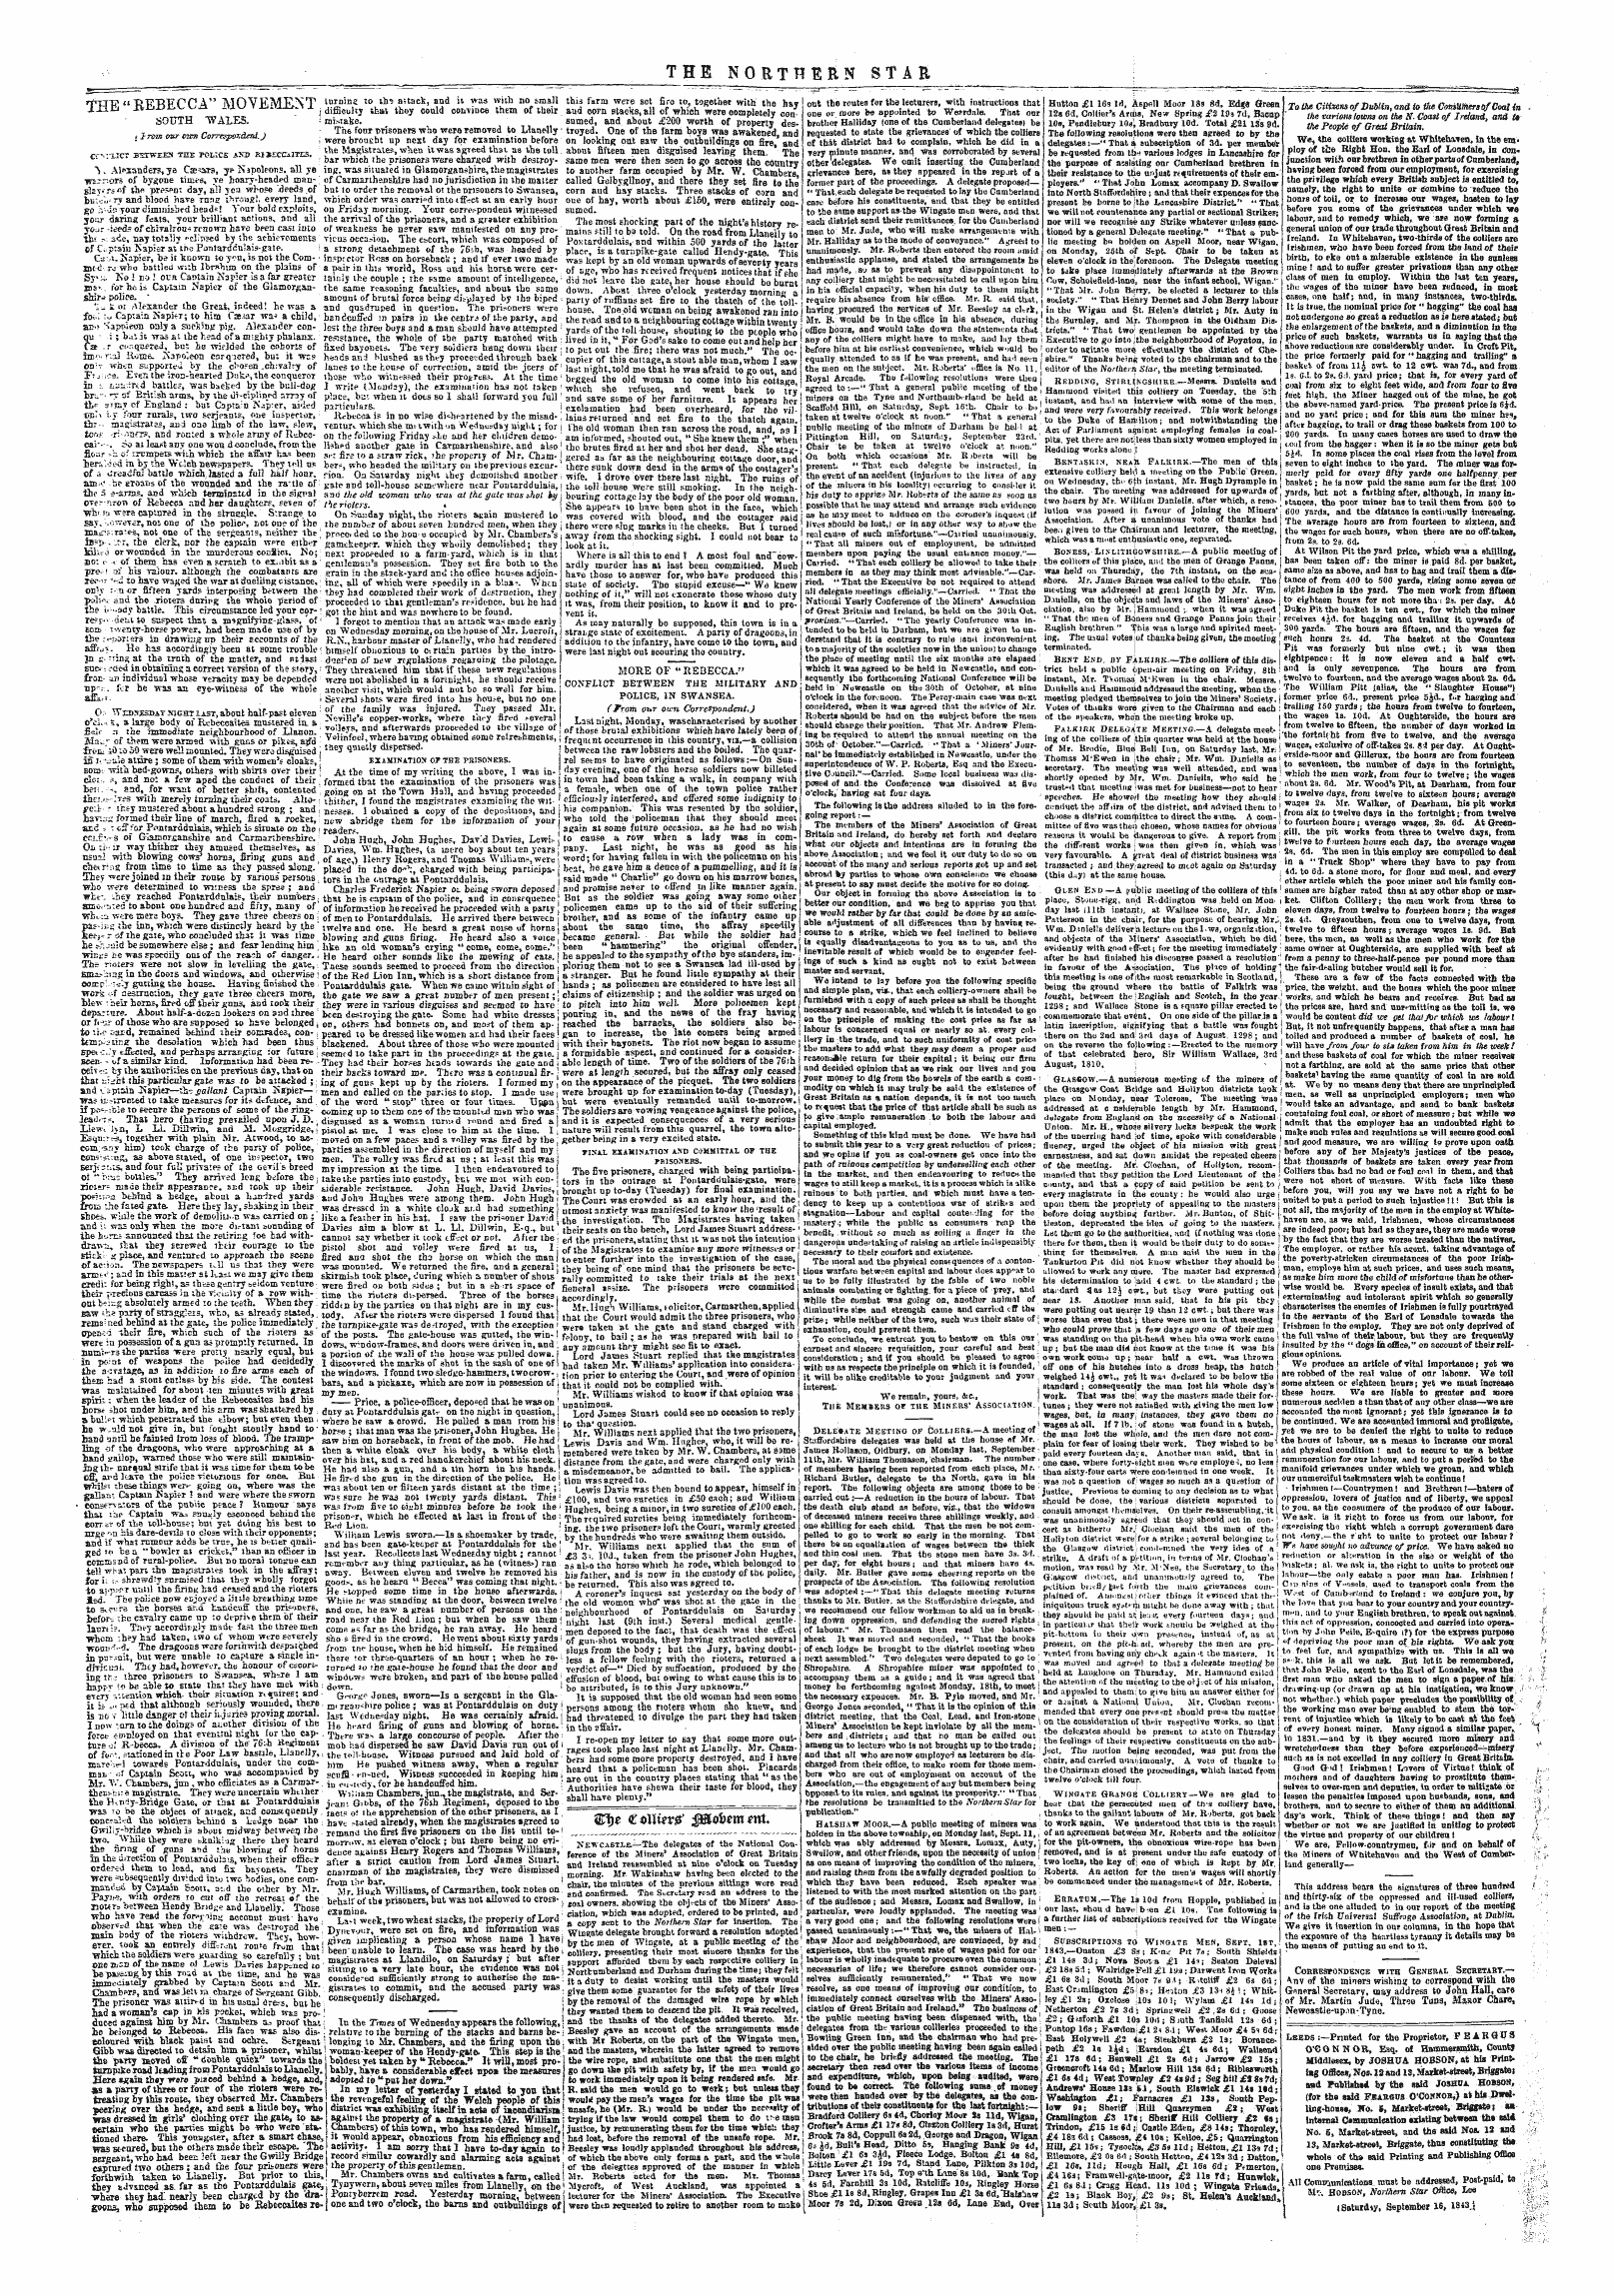 Northern Star (1837-1852): jS F Y, 5th edition - Leeds :—Printed For The Proprietor, Fear Gv S O'Connor, Esq. Ol Hammersmith, Conntj